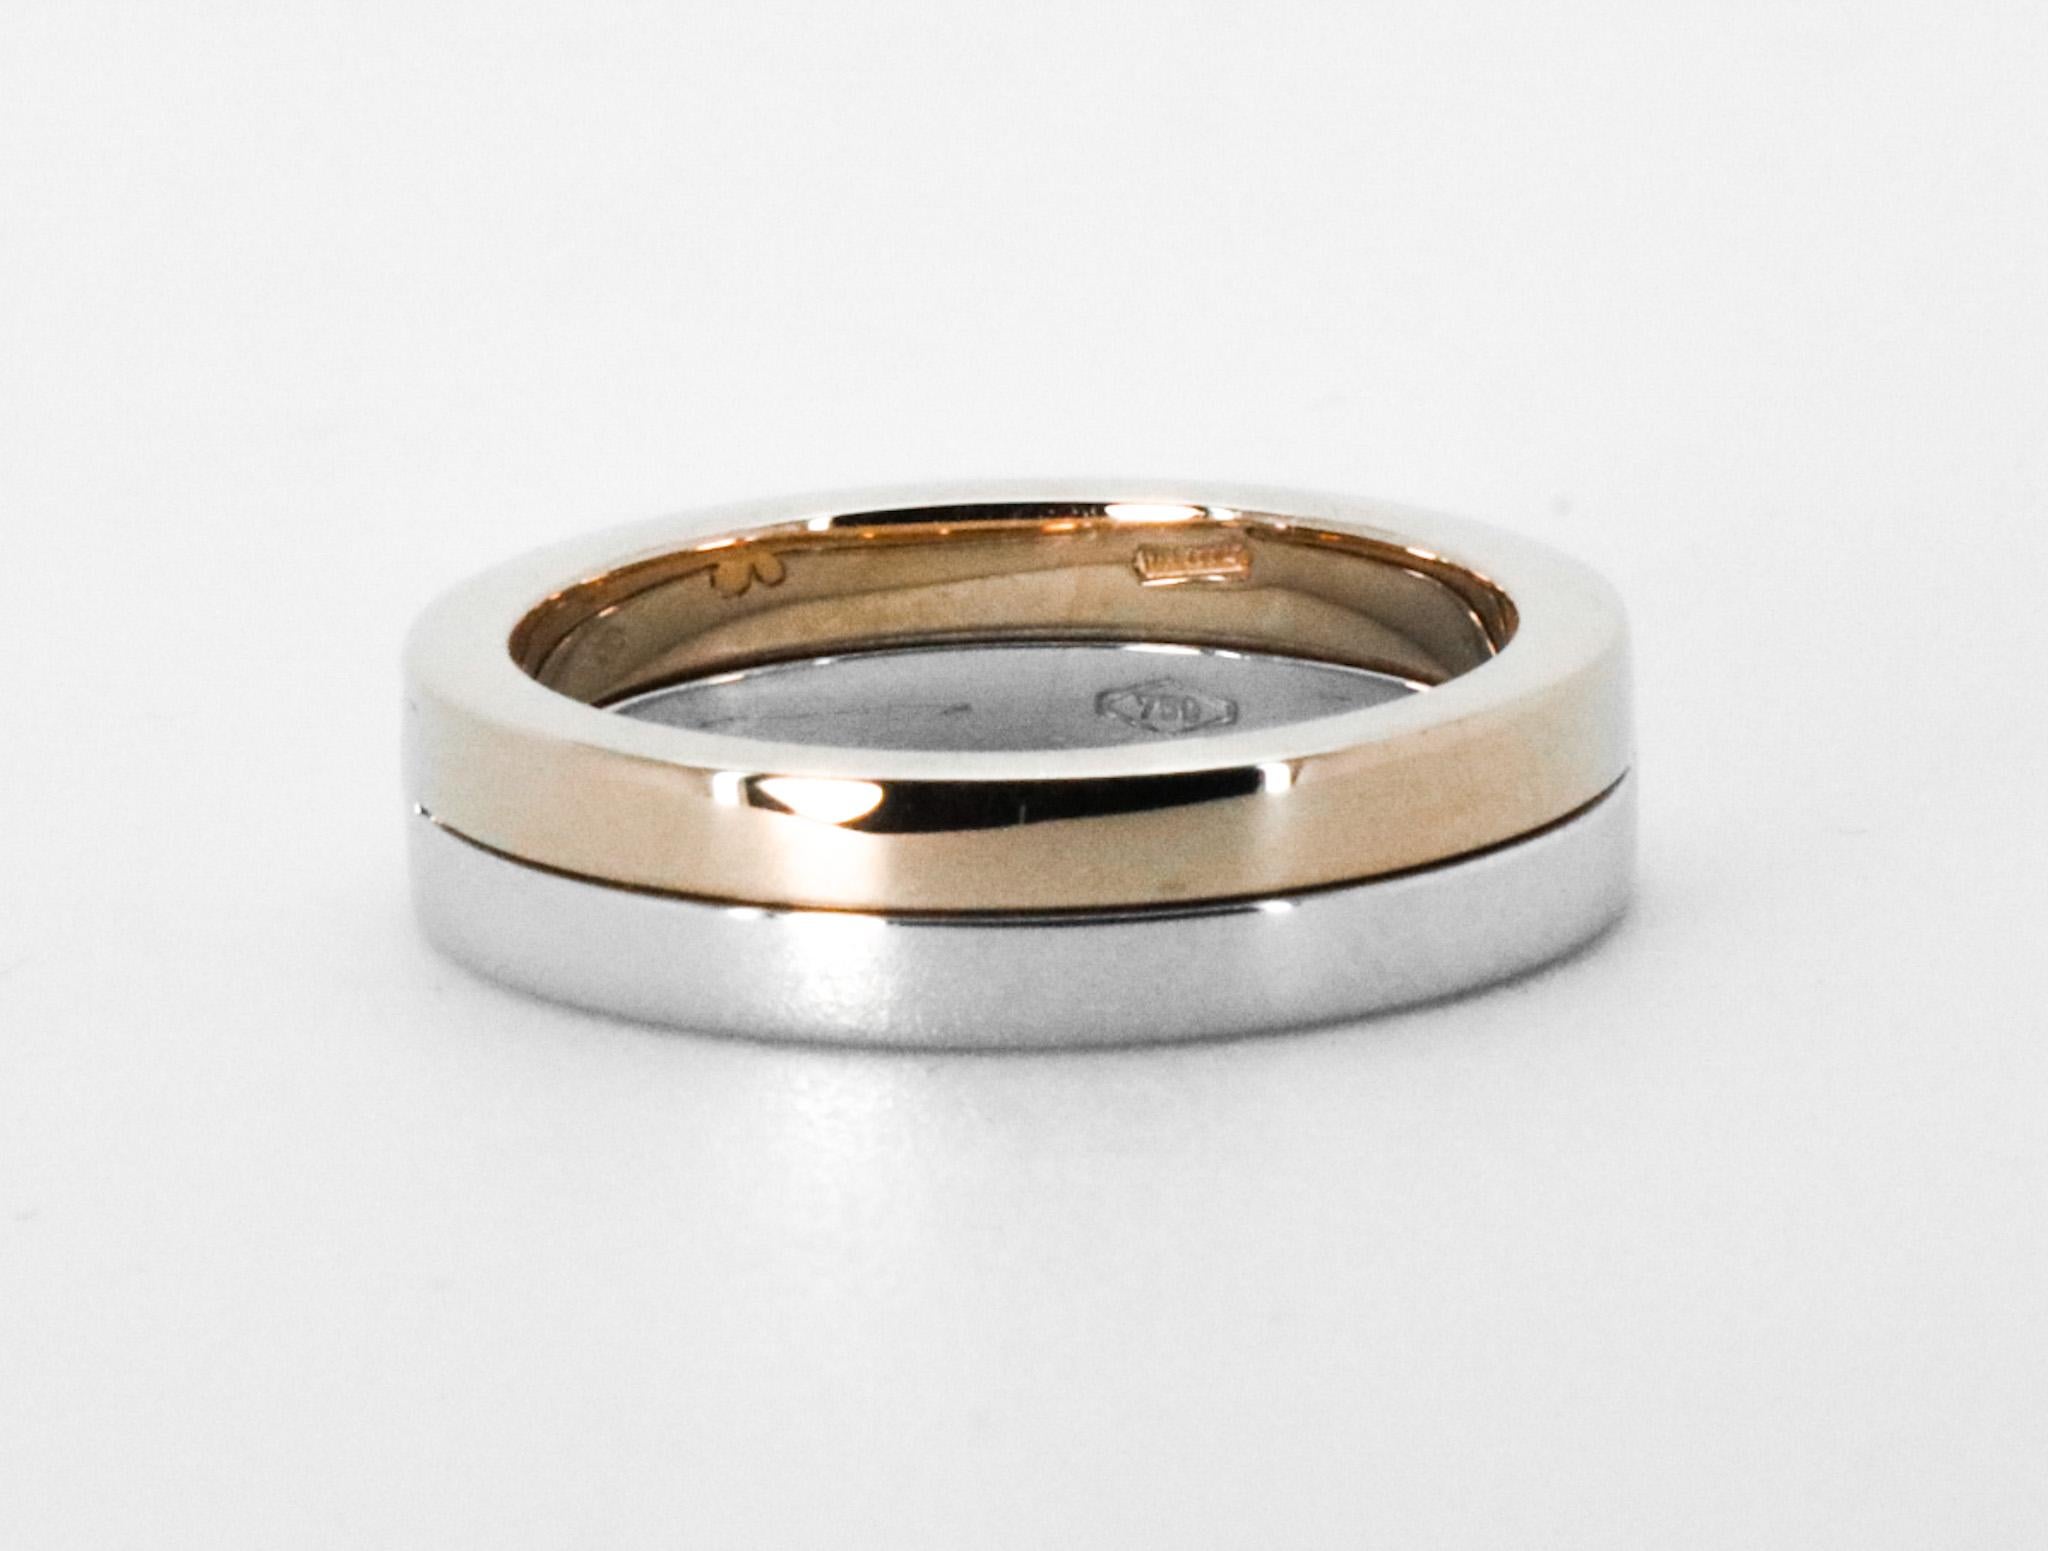 Bespoke 18k Gold Wedding Ring with Interlocking Initials Design For Sale 1